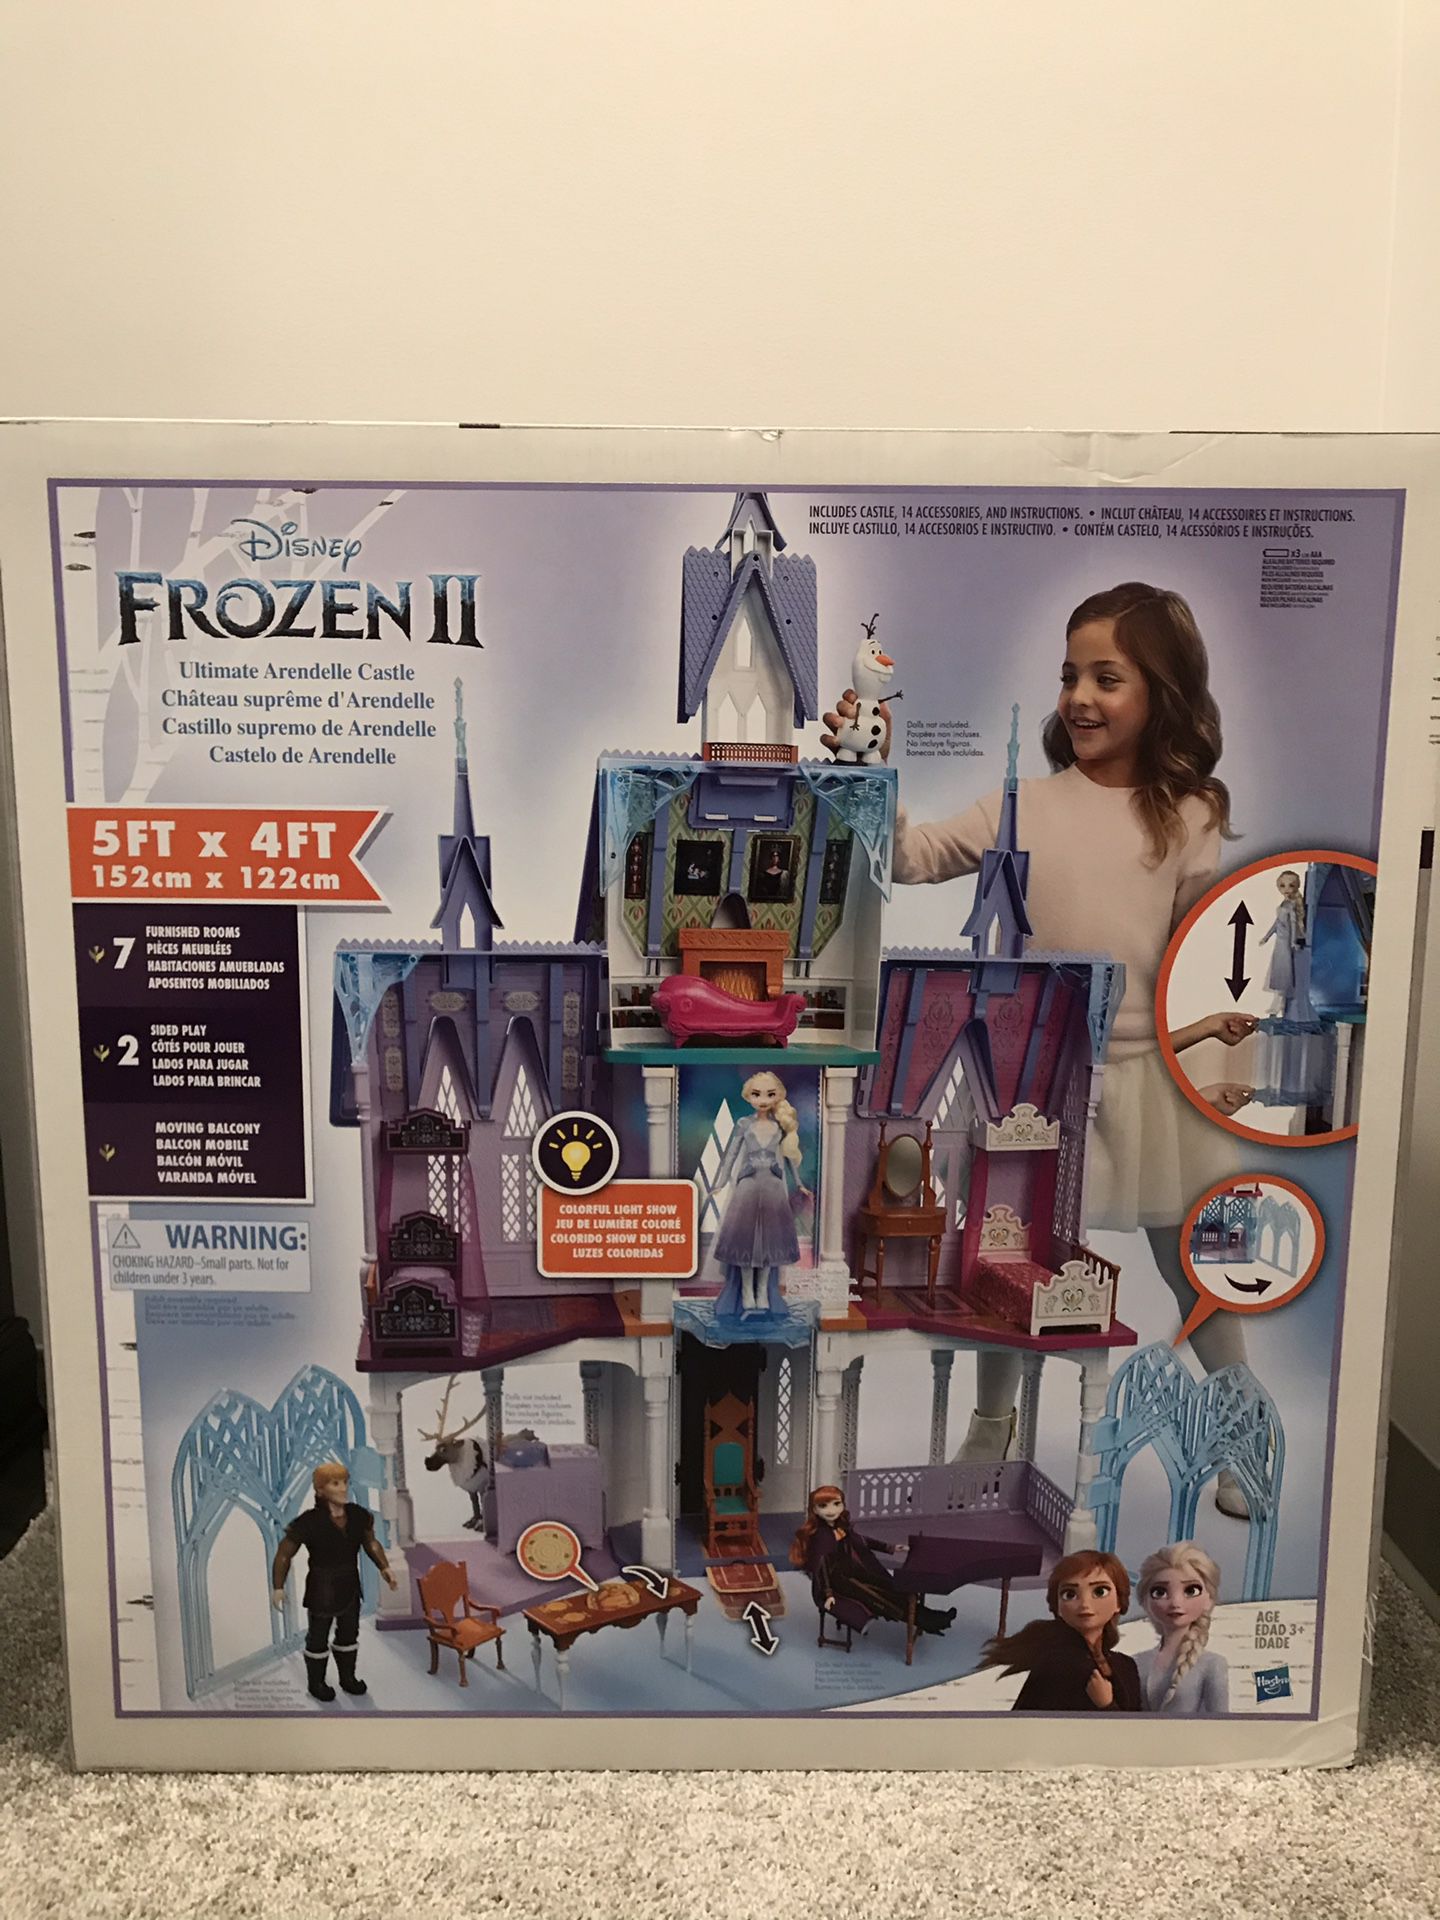 Brand new Frozen II Ultimate Arendelle Castle